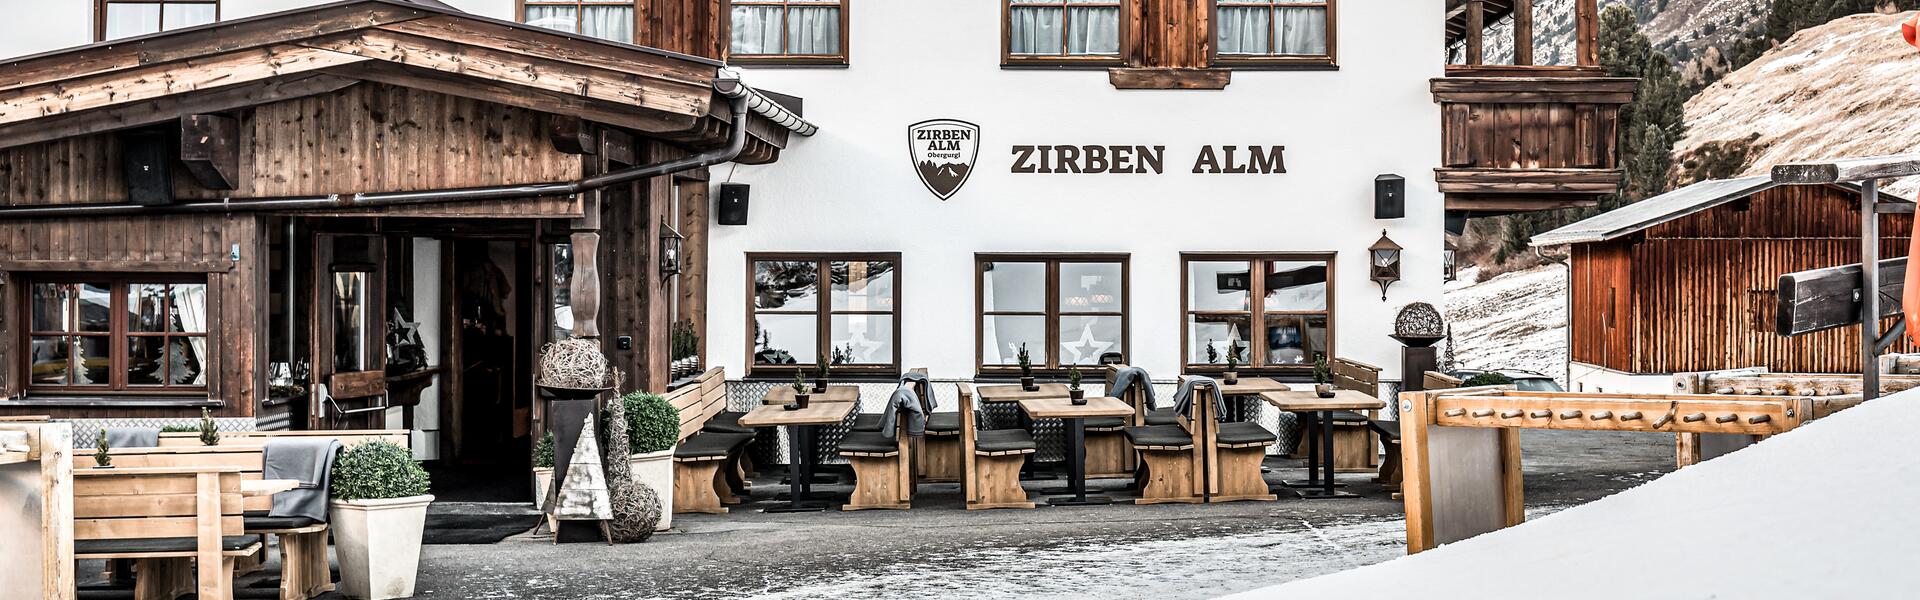 zirbenalm mountain restaurant with sun terrace | © Alexander Maria Lohmann